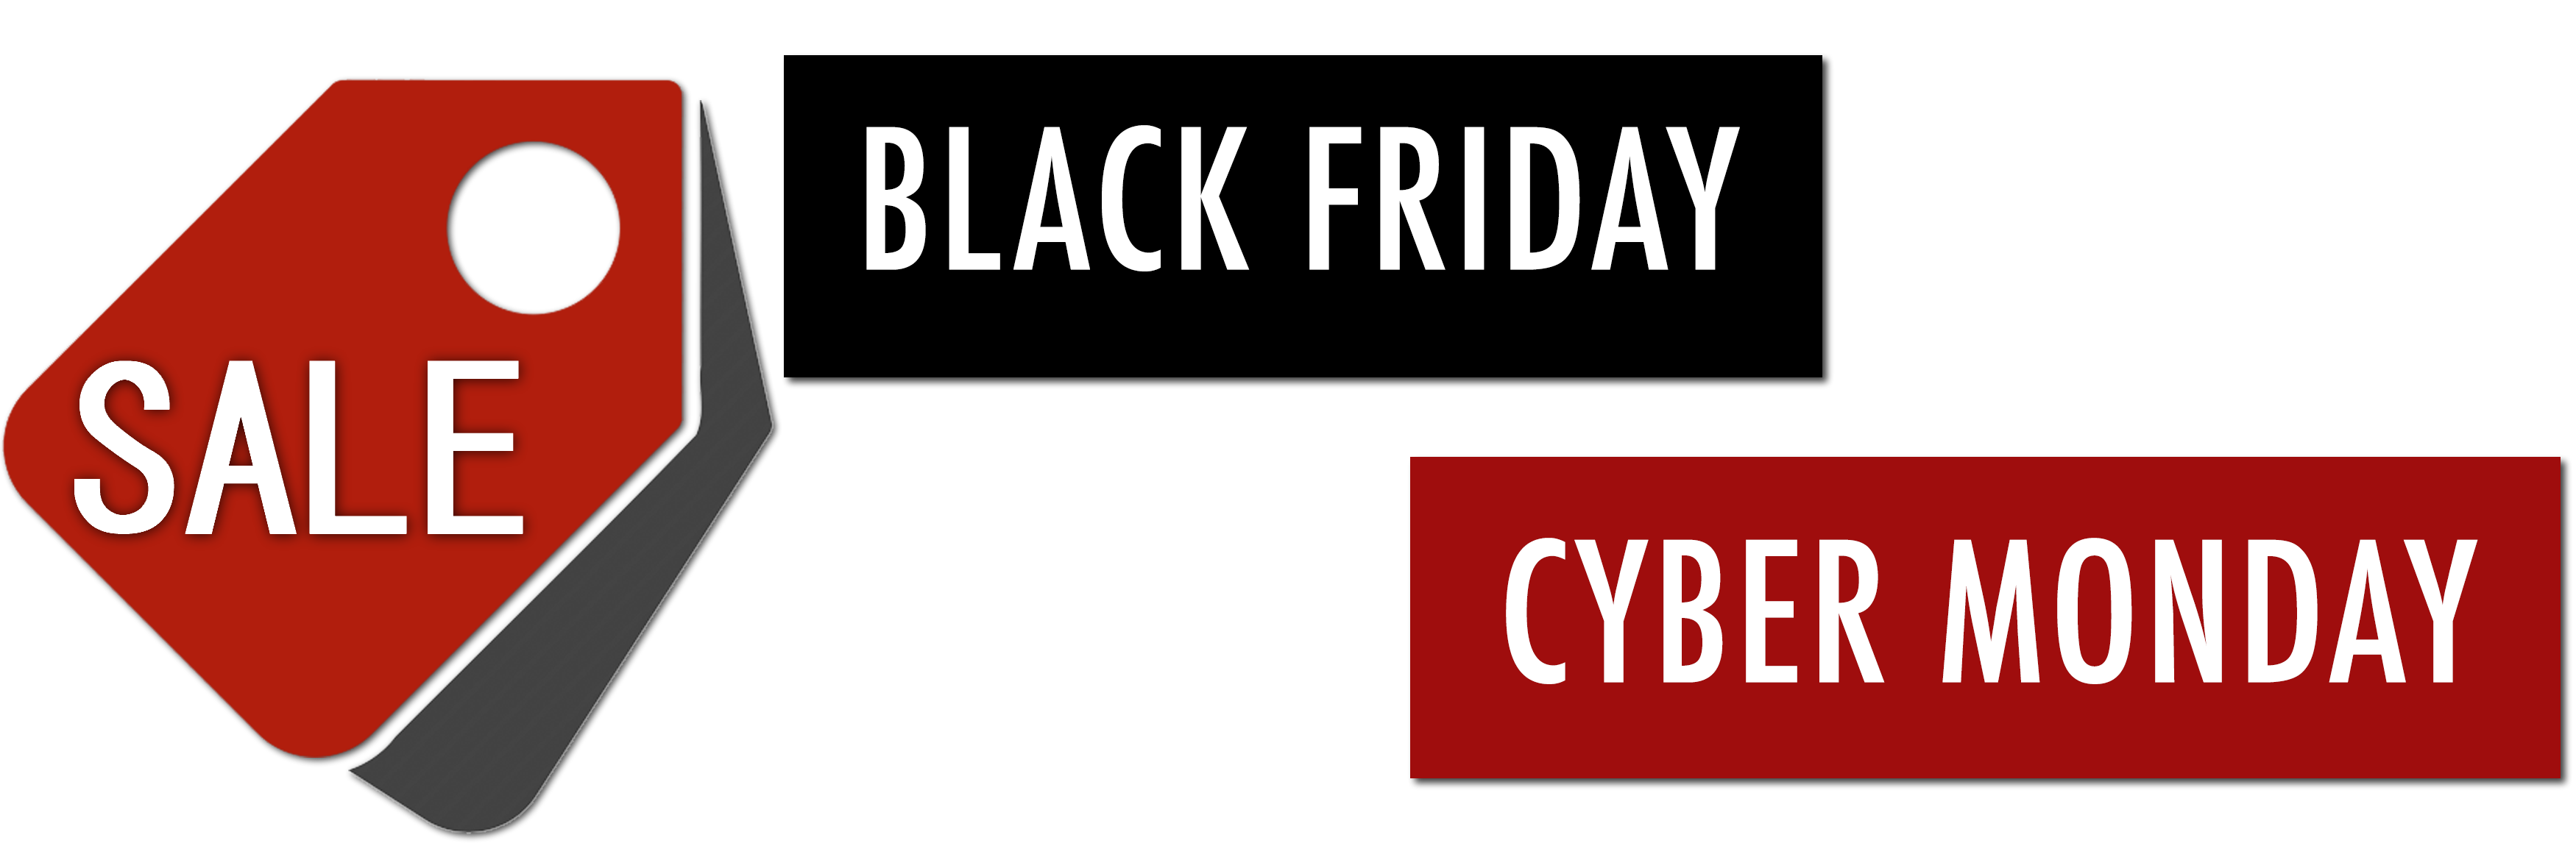 black Friday - Cyber Monday Sale